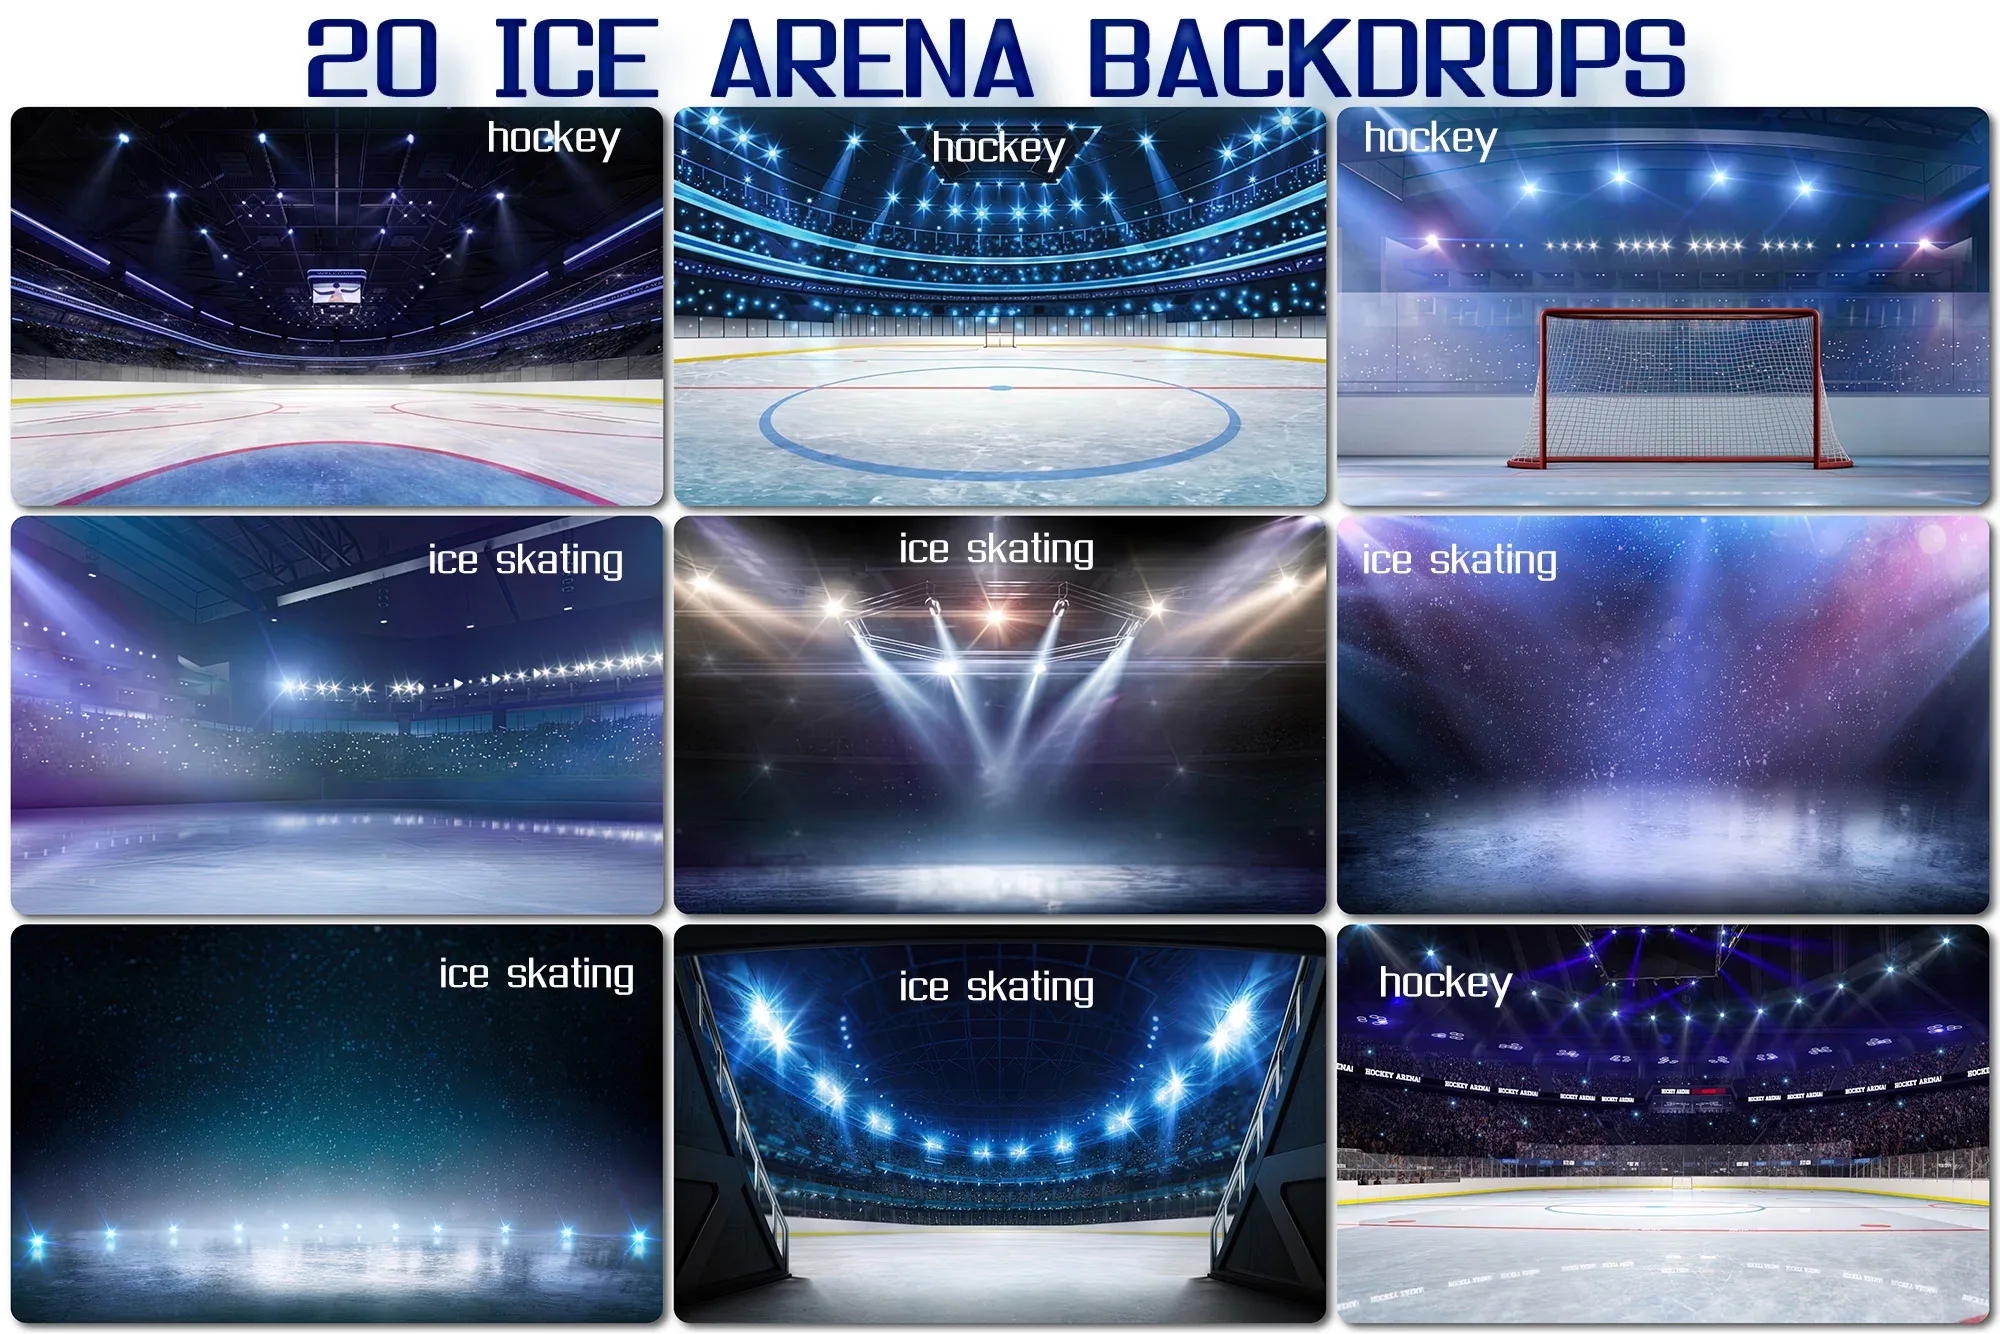 20 Ice Arena Backdrops, Empty ice rink, hockey skating stadium